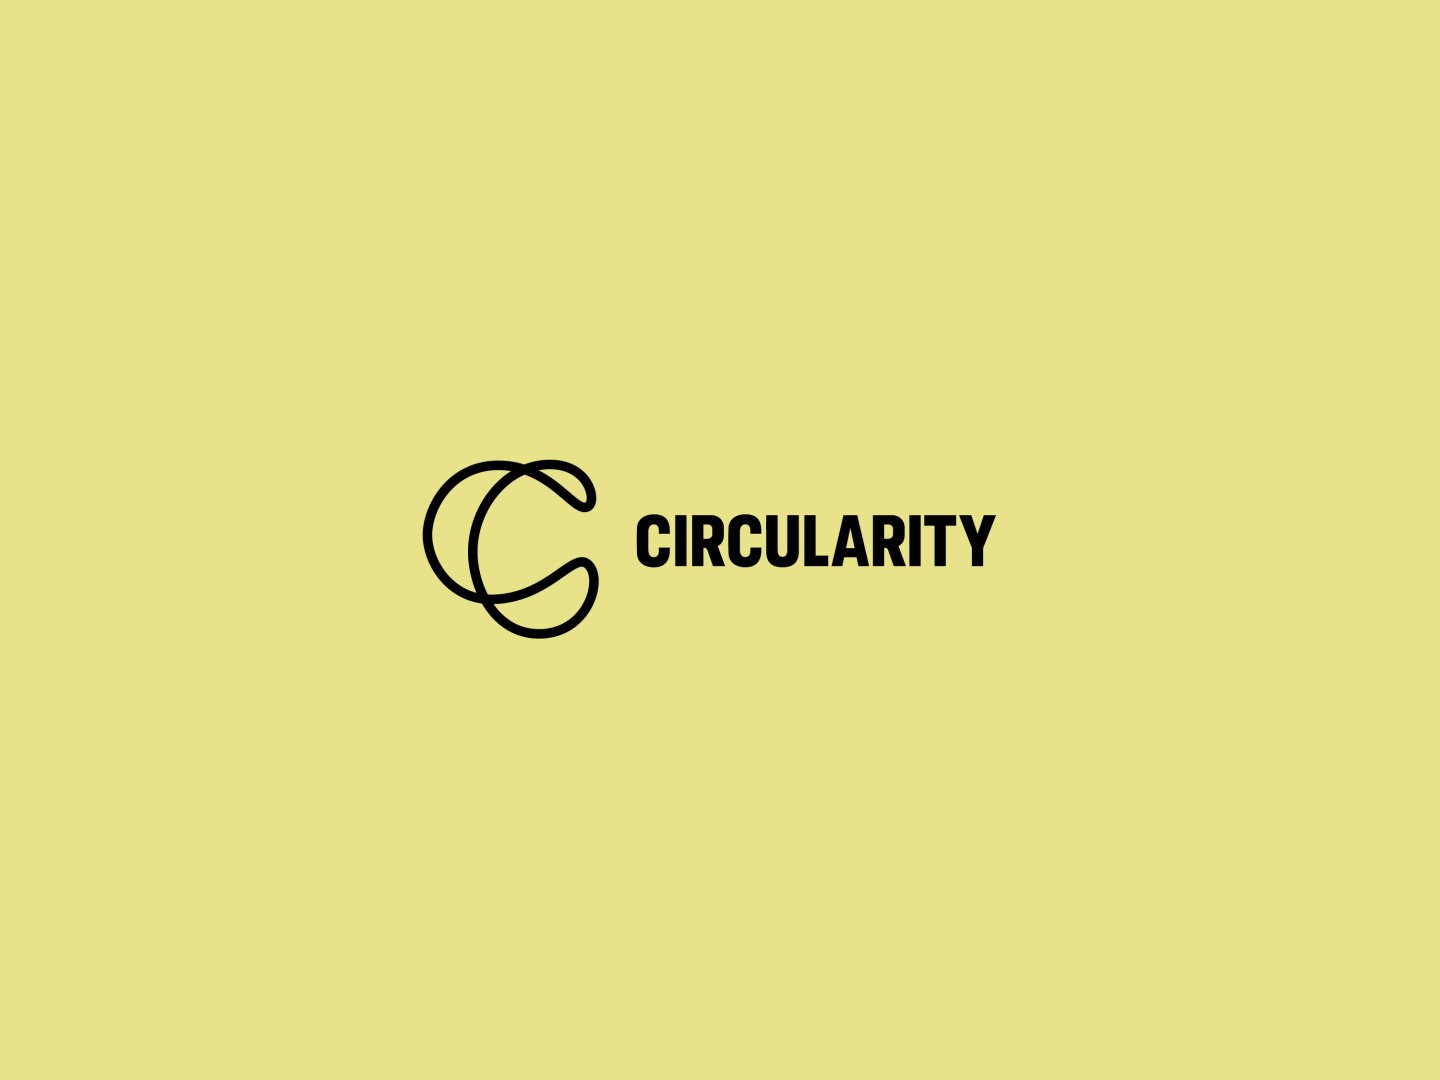 mejores-logos-2020-2021-circularity-08